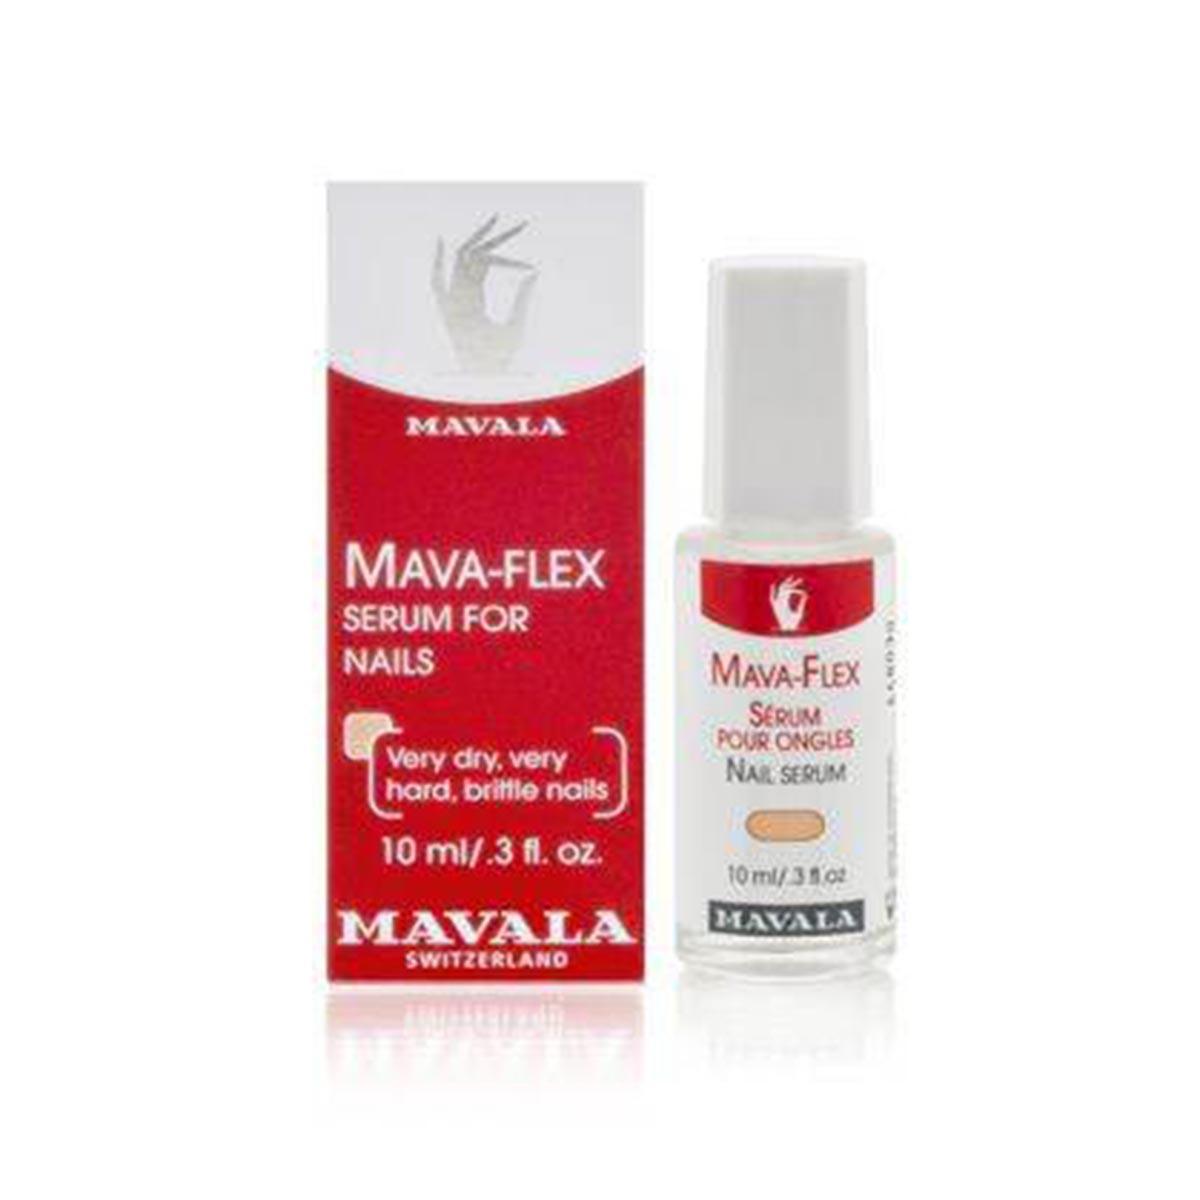 mavala-nails-serum-10ml-nagellackierer